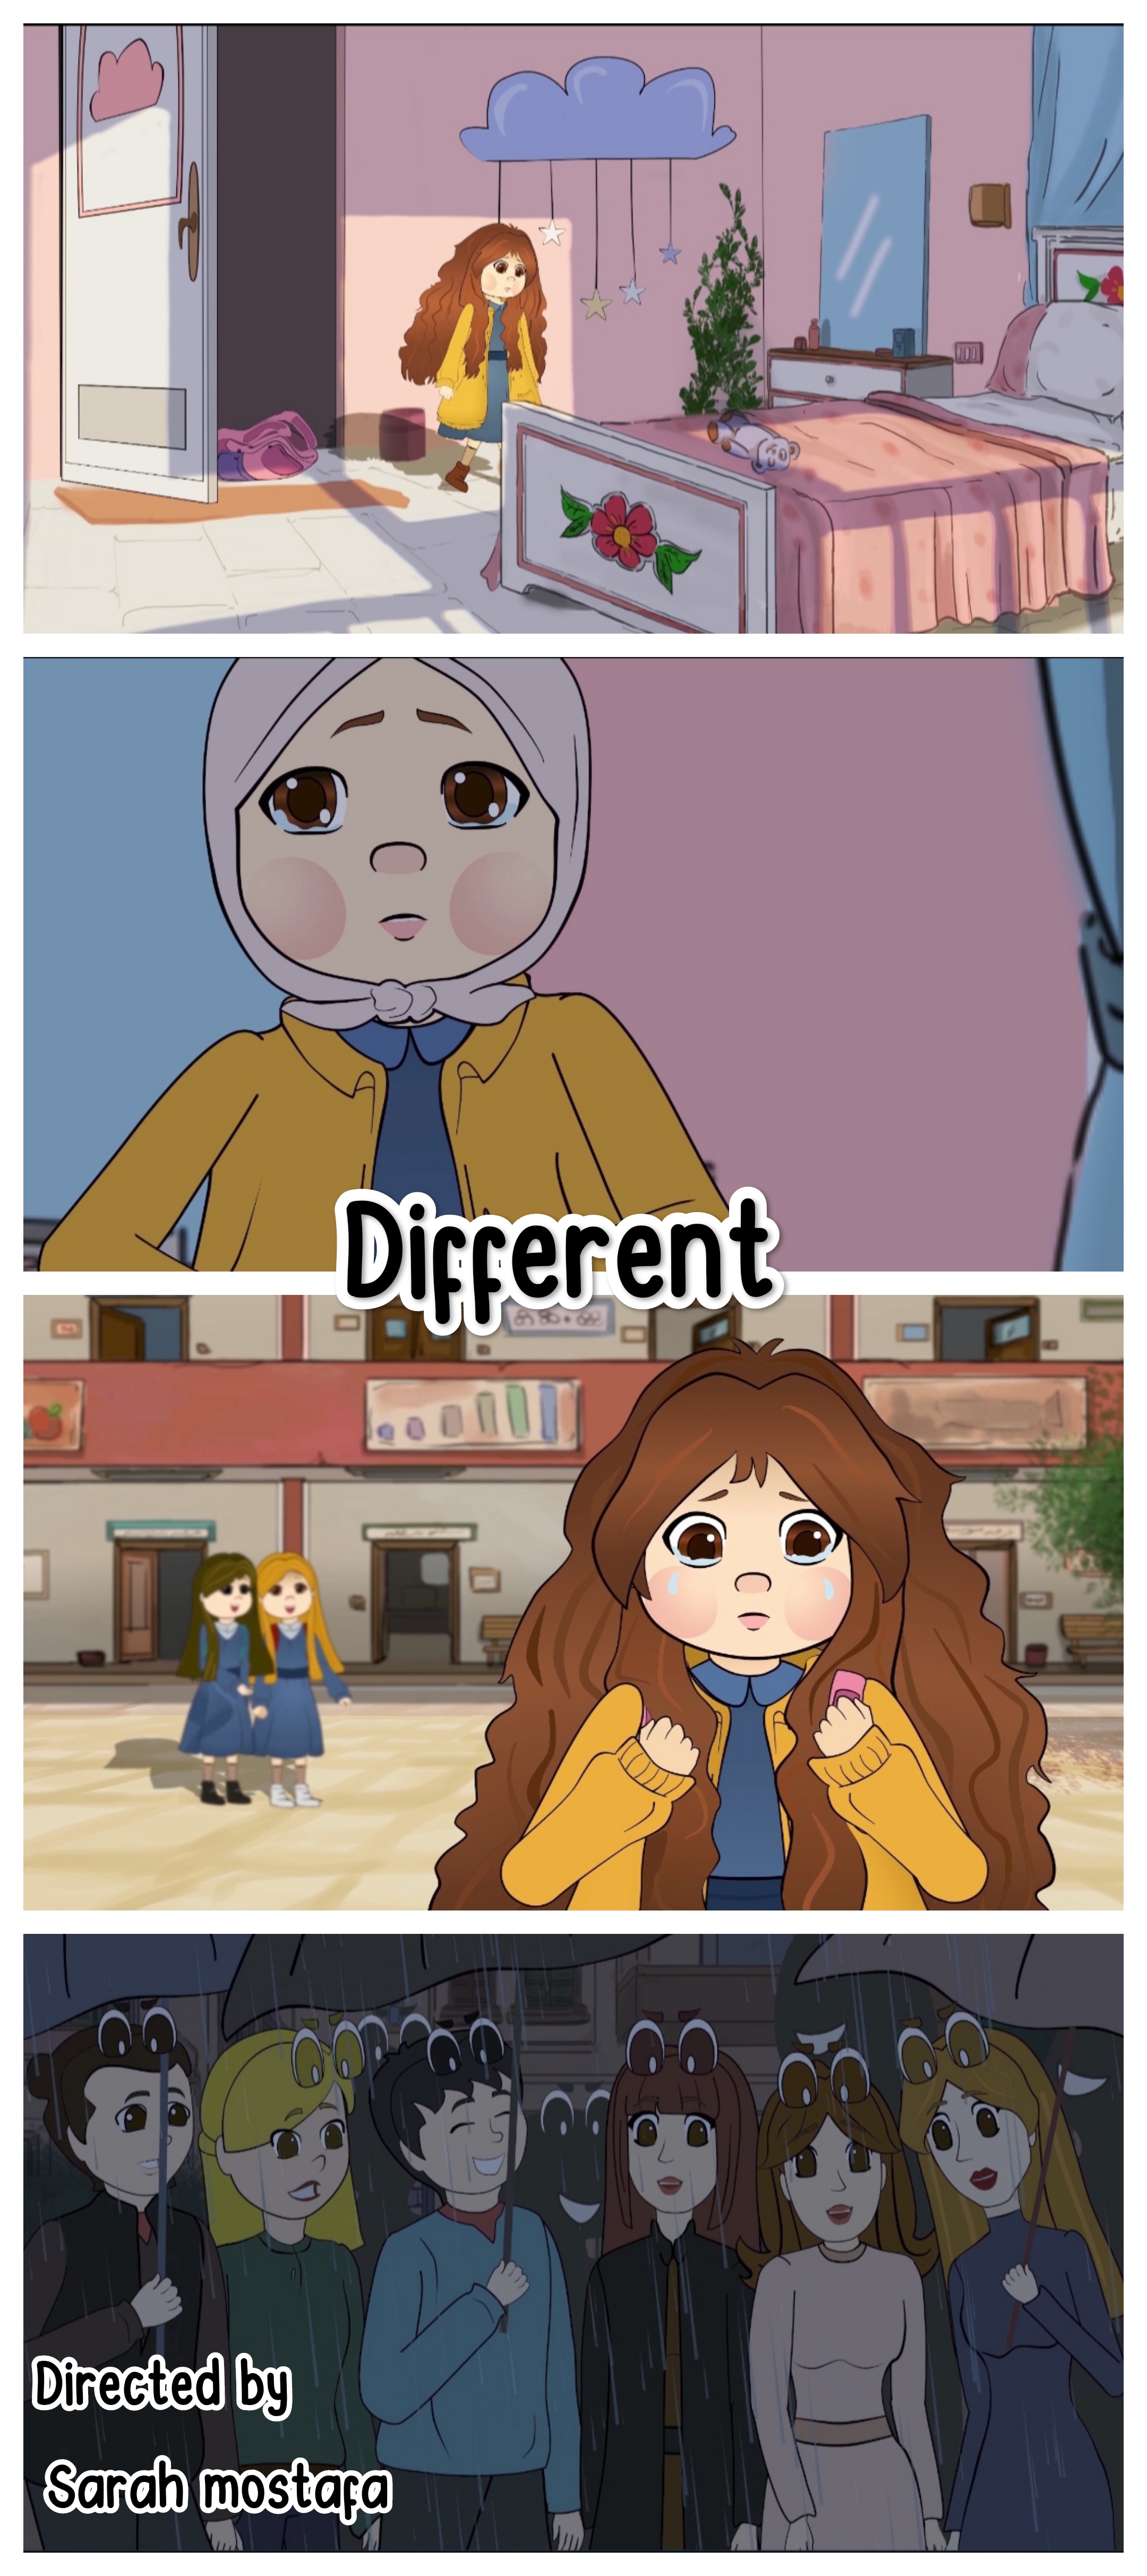 DIFFERENT